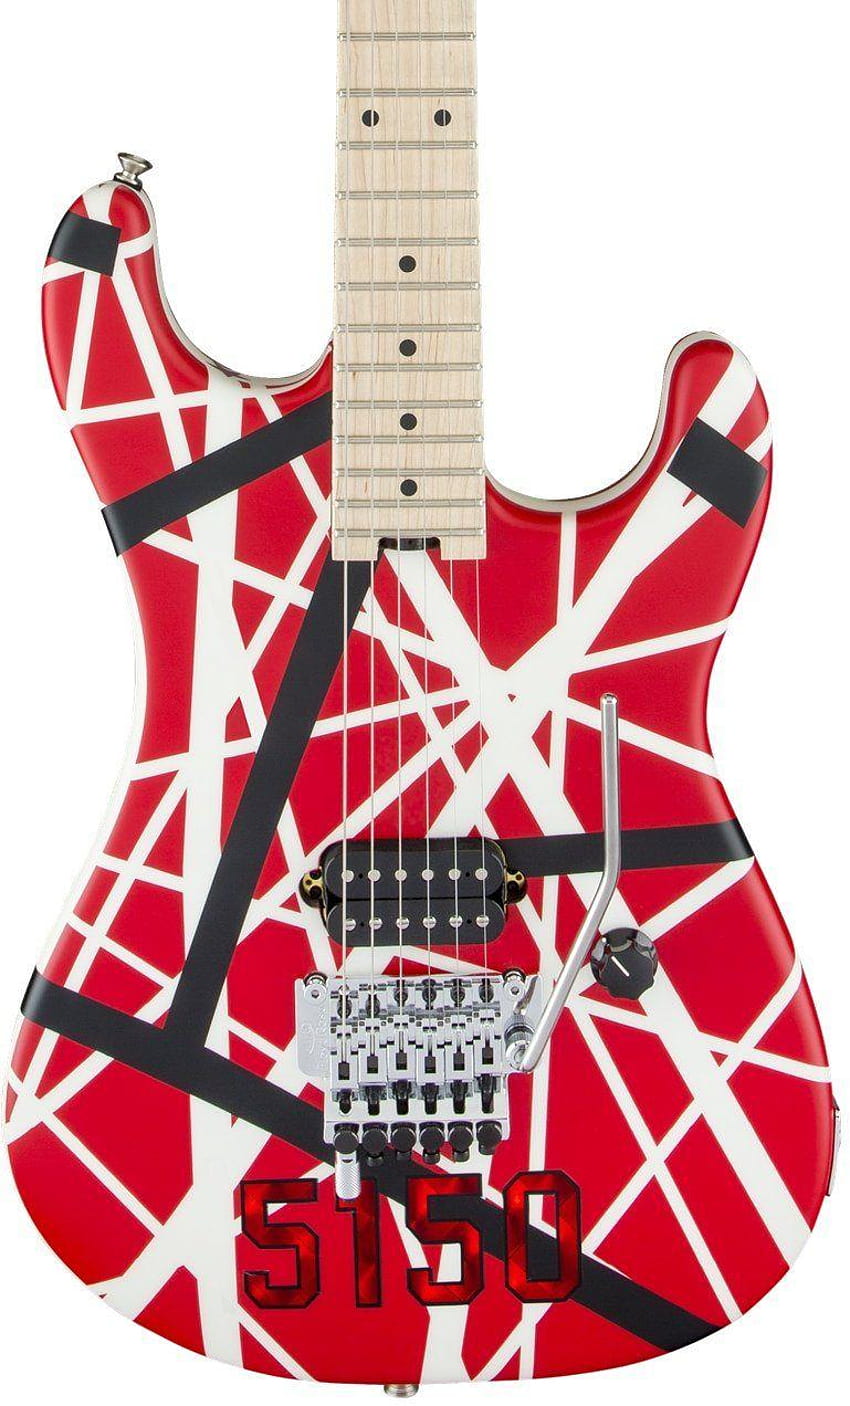 EVH Striped Series 5150, fond de guitare van halen Fond d'écran de téléphone HD